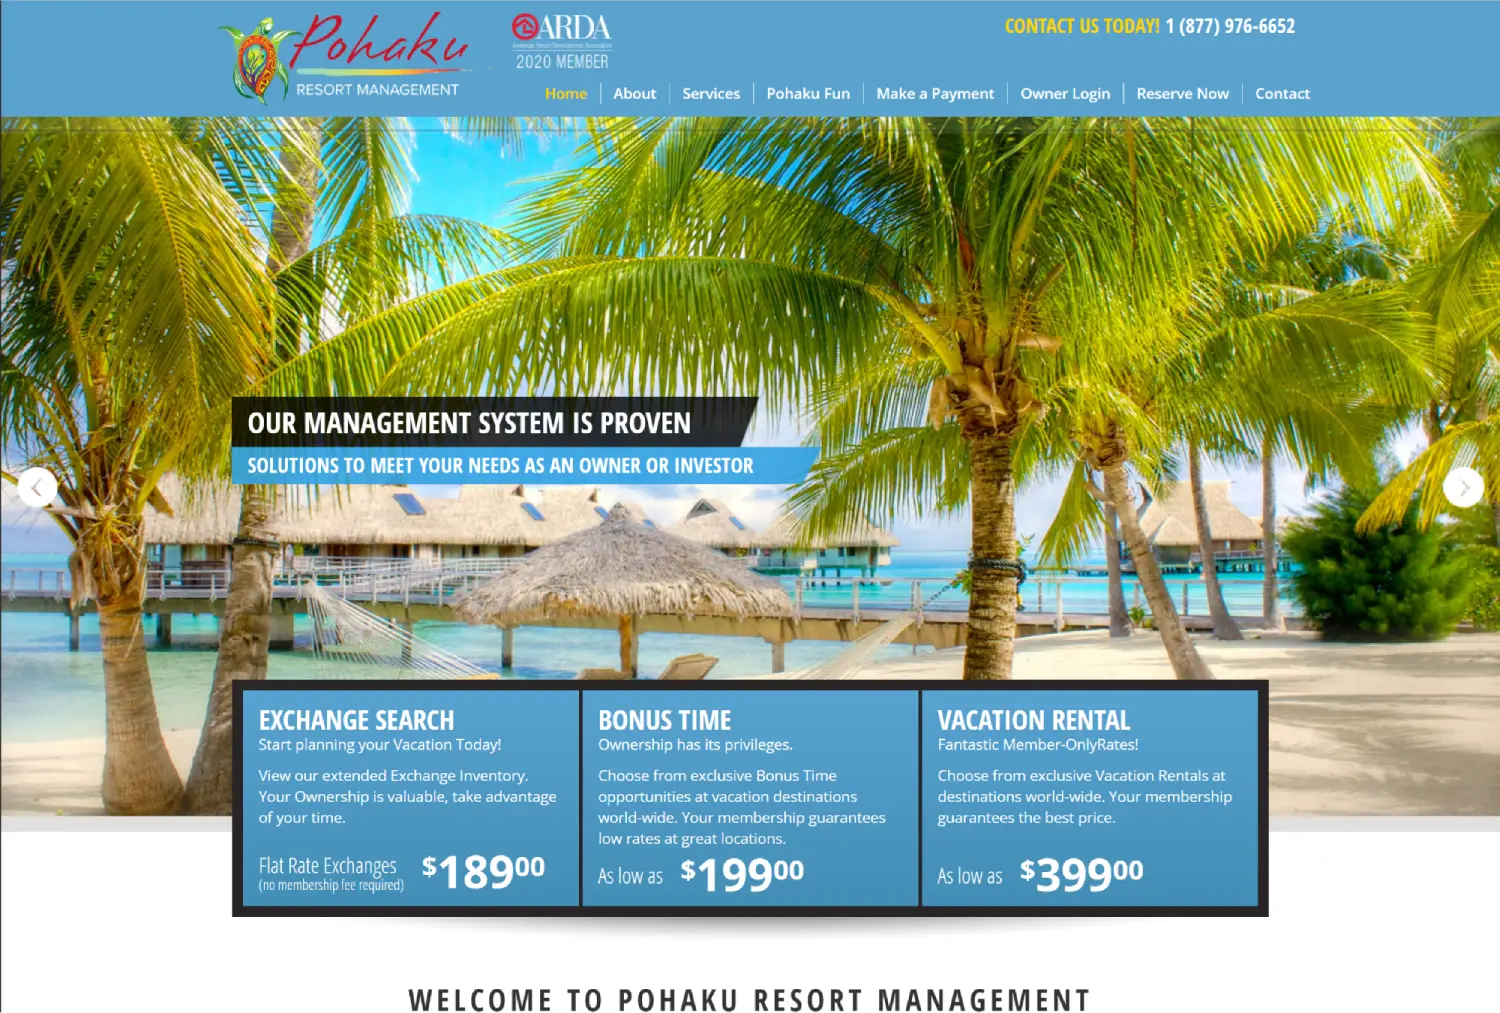 Pohaku Resort Management